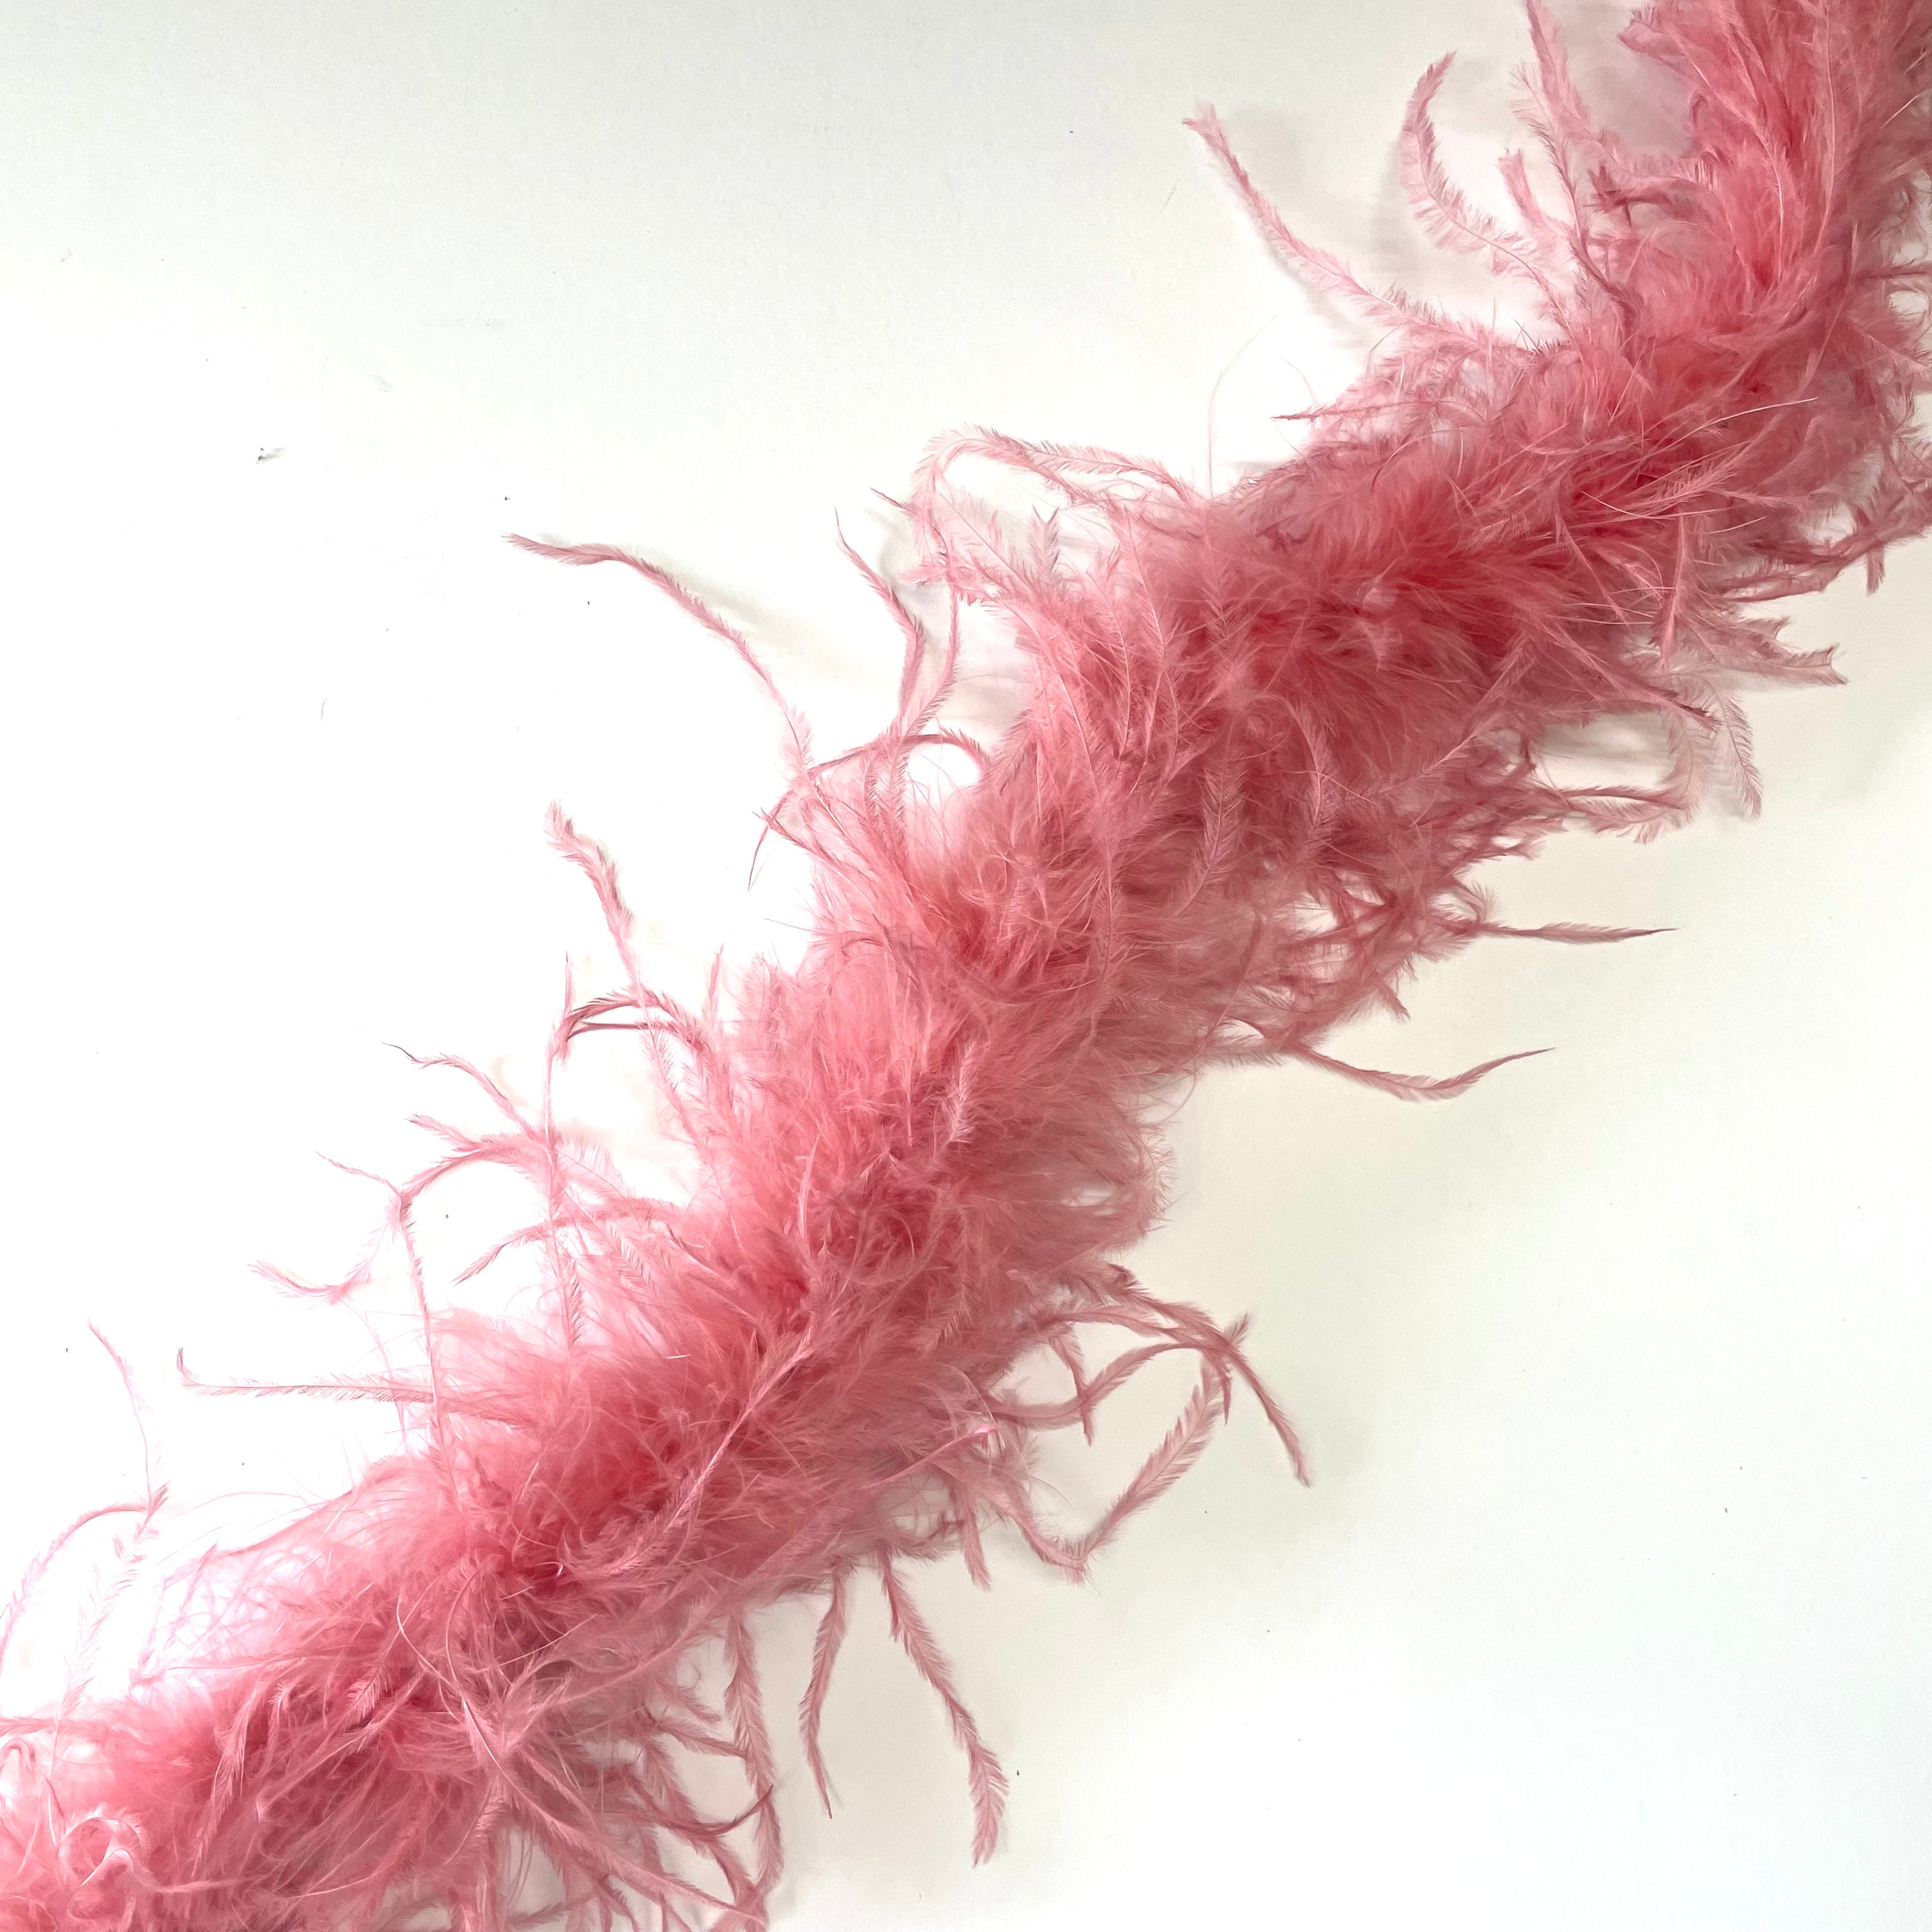 Ostrich & Marabou Feather Boa Trim per 10cm - Dusty Pink